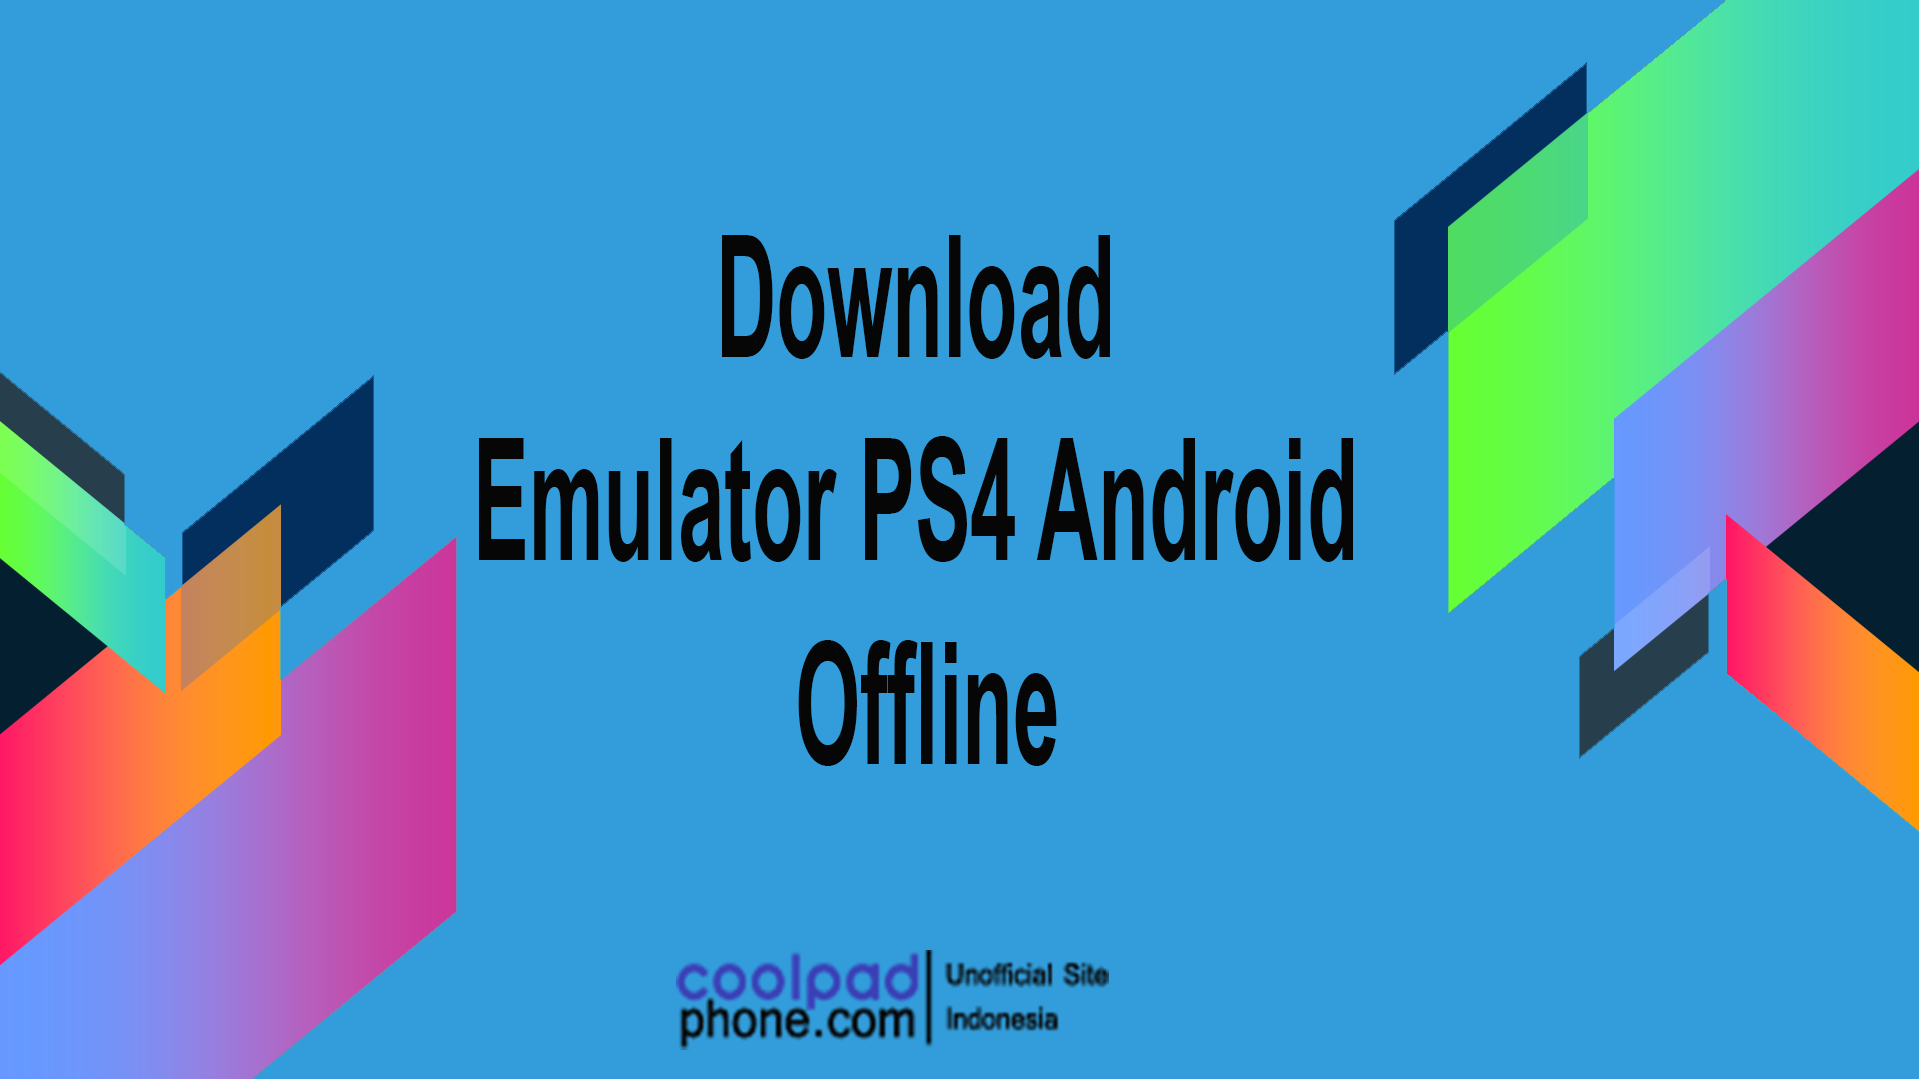 Download-Emulator-PS4-Android-Offline